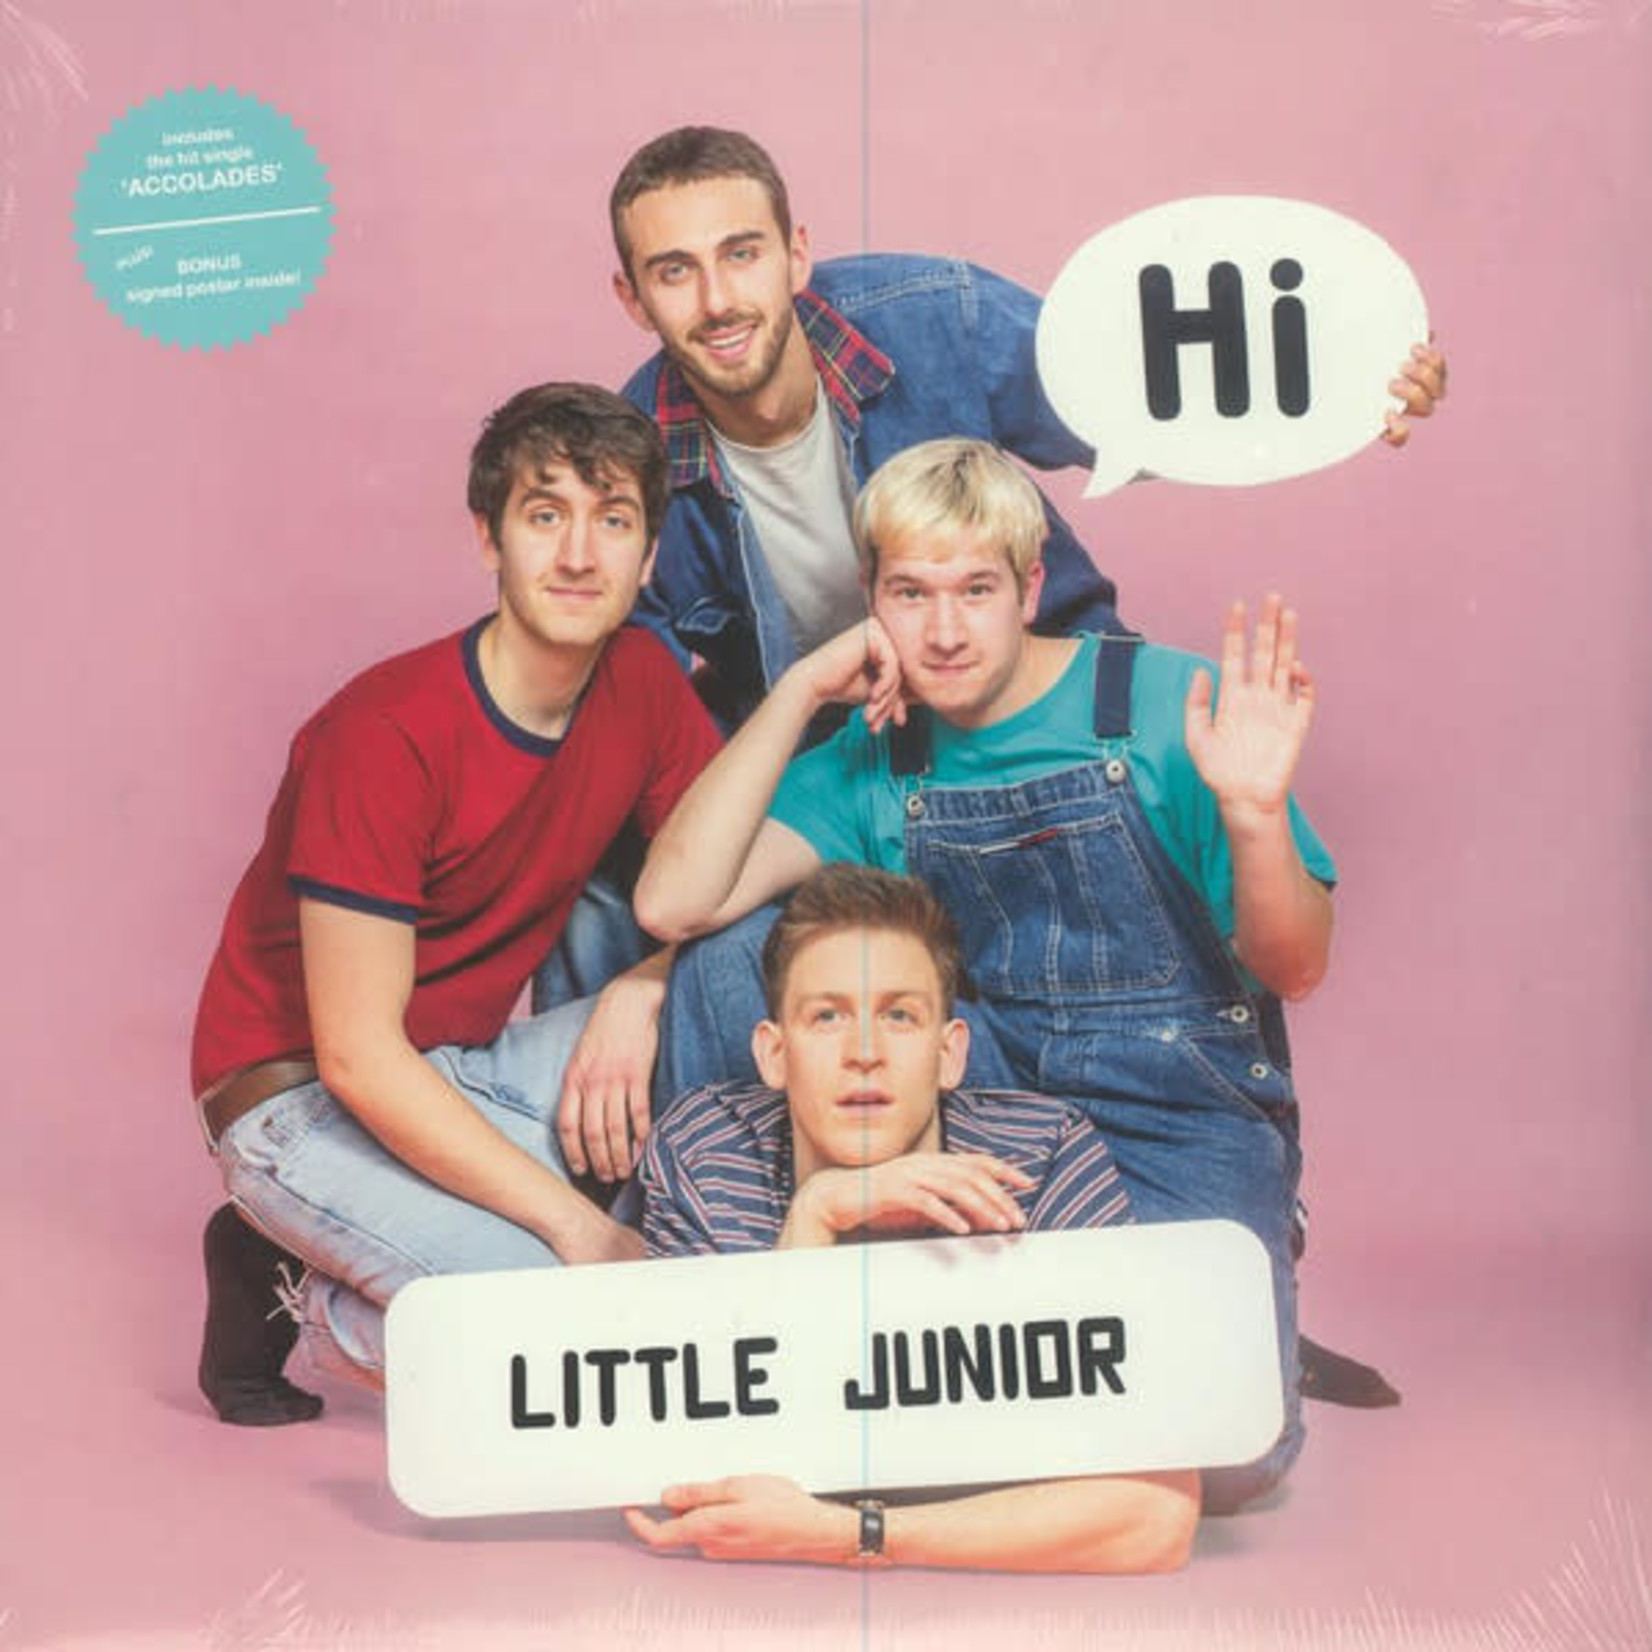 Grand Jury Little Junior - Hi (LP) [Green Seafoam]